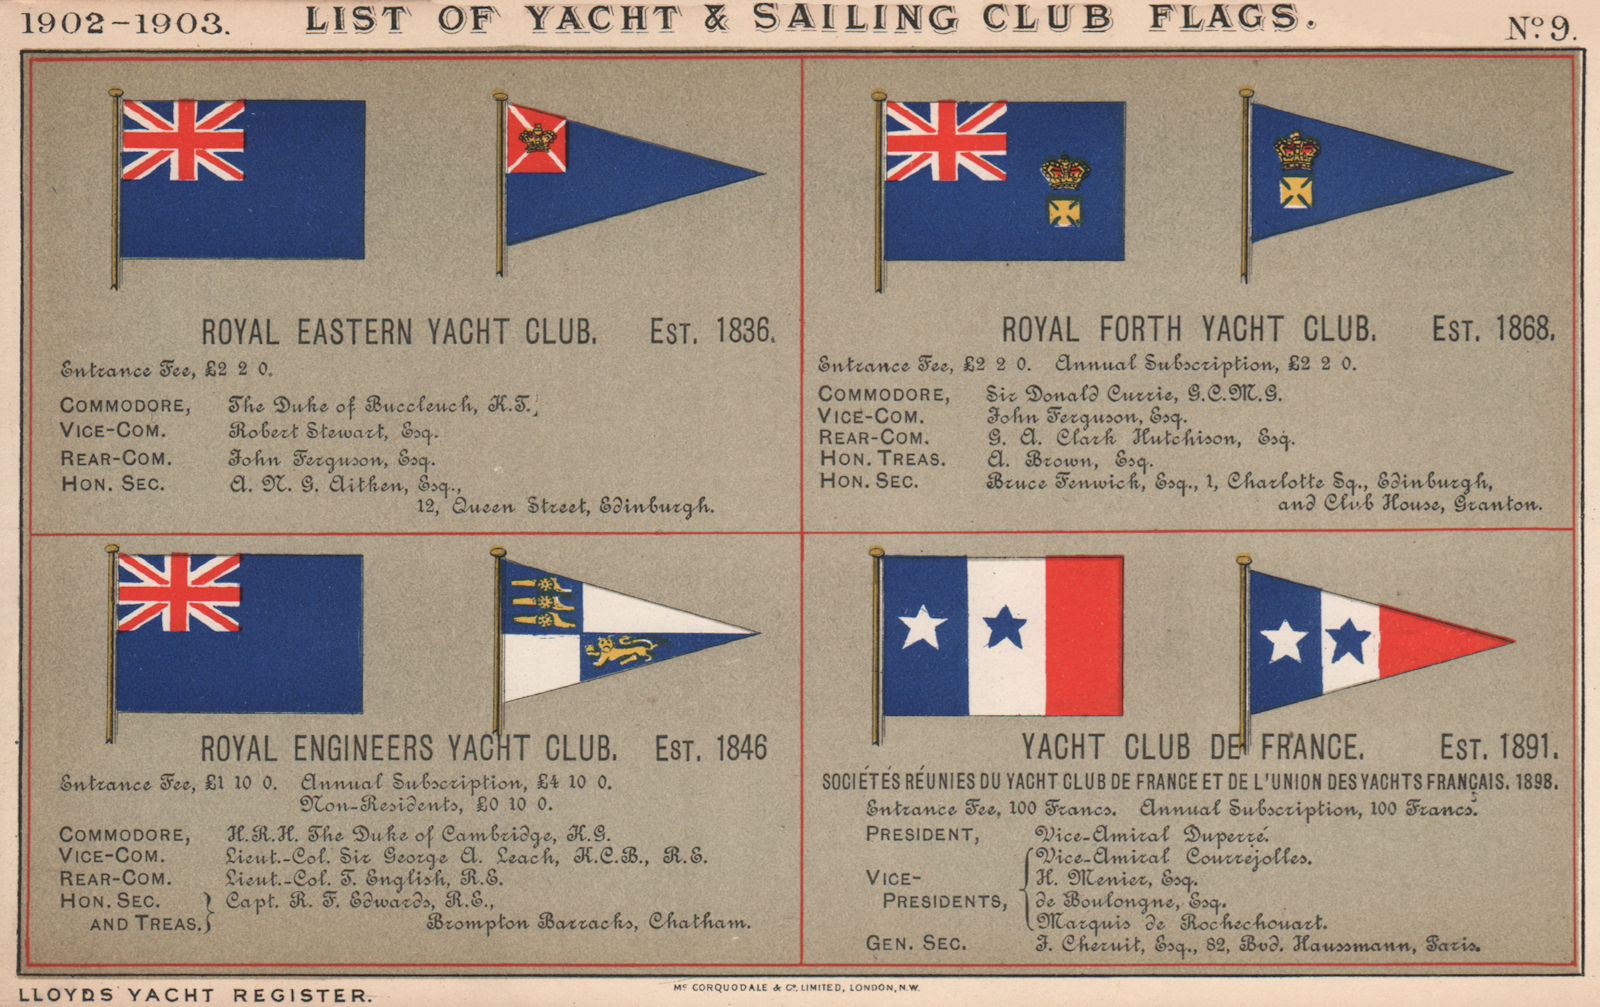 ROYAL YACHT & SAILING CLUB FLAGS. Eastern. Forth. Royal Engineers. France 1902